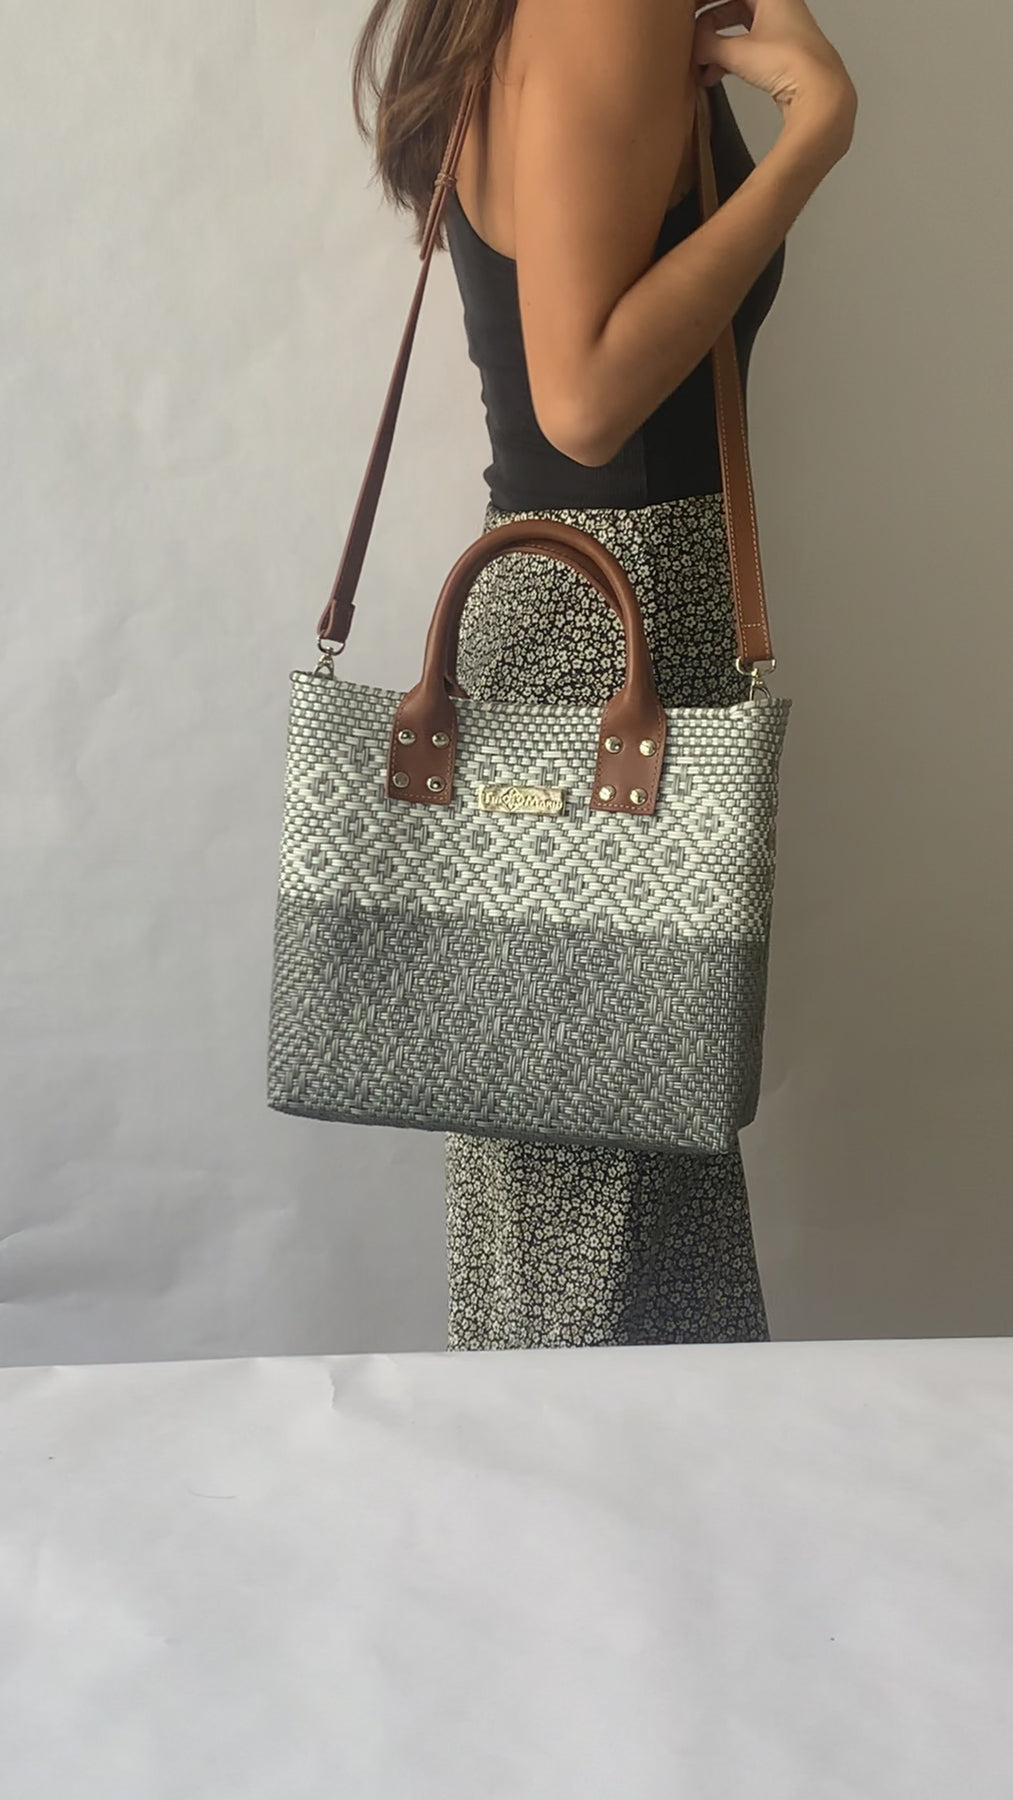 Panda Bag Leather handbag Cute panda bag Fashion Phone Purse for Girls  Women Animal Panda Casual Handbag: Handbags: Amazon.com